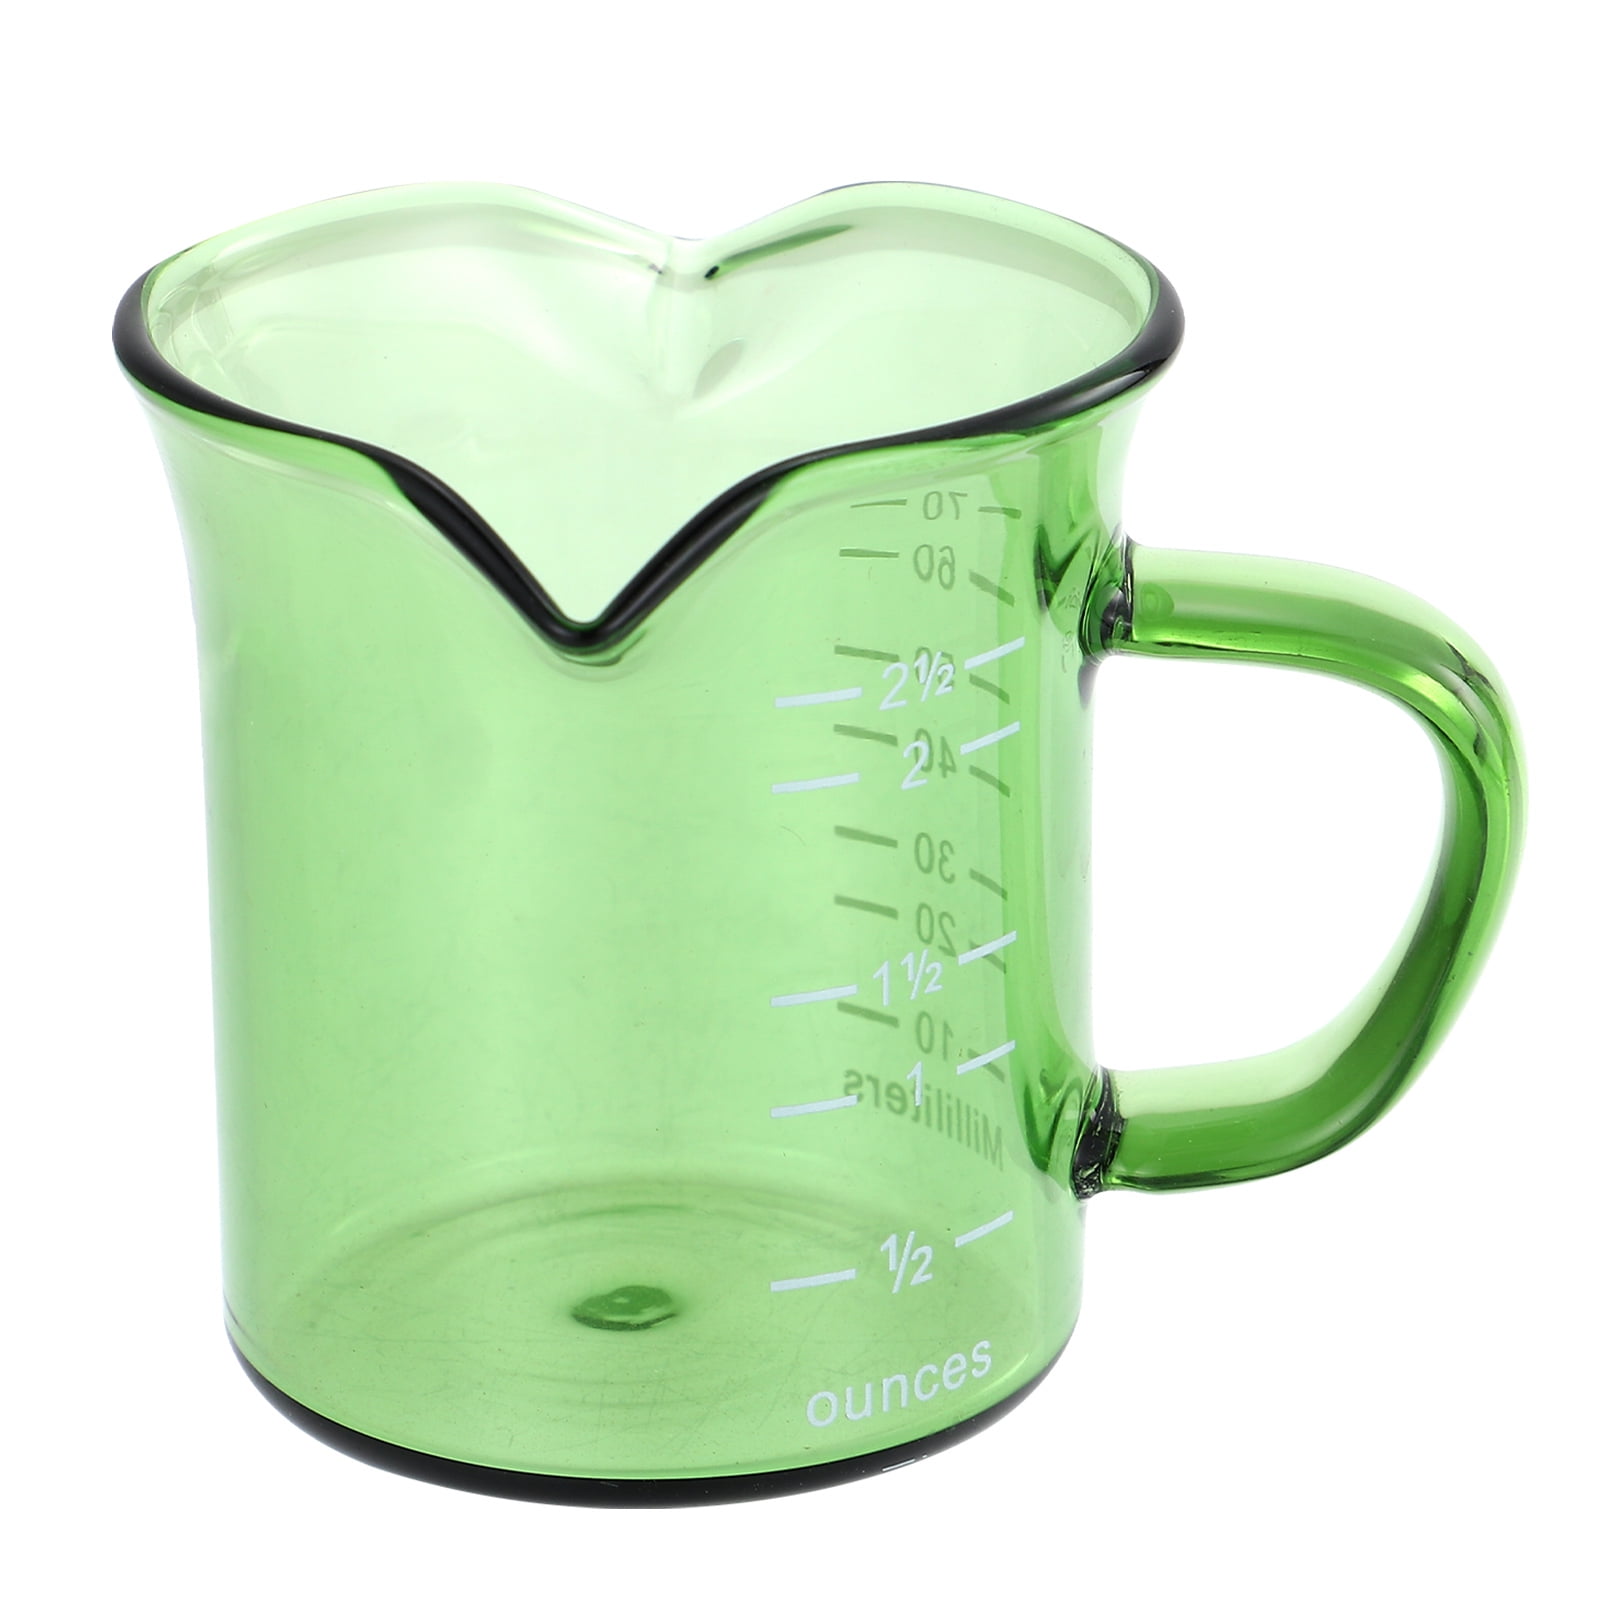 Serenity Milk Glass Measuring Cups